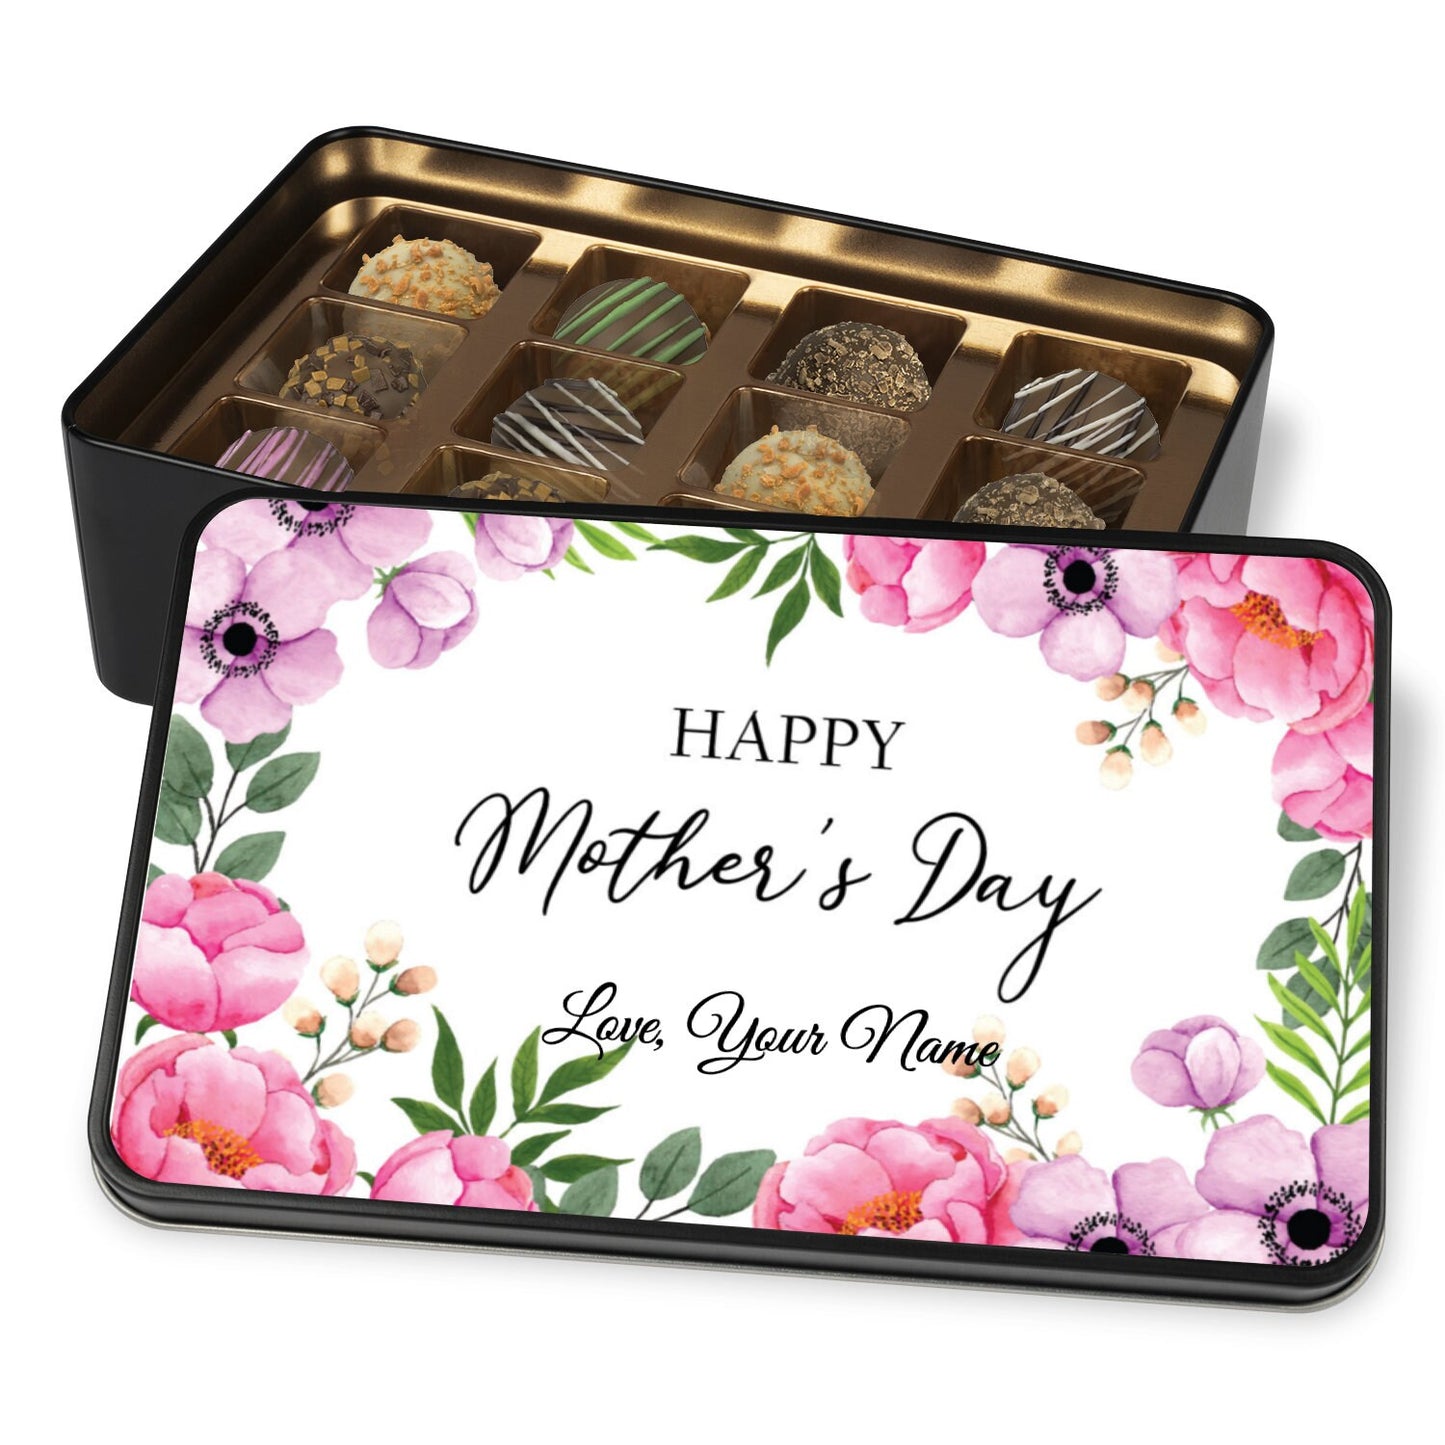 Mothers Day Chocolate Gift, Chocolate Truffles for Mom, Chocolate Gift, Dark Chocolate, Mothers Gift, Gift for Mother, 1st Mothers Day Gift